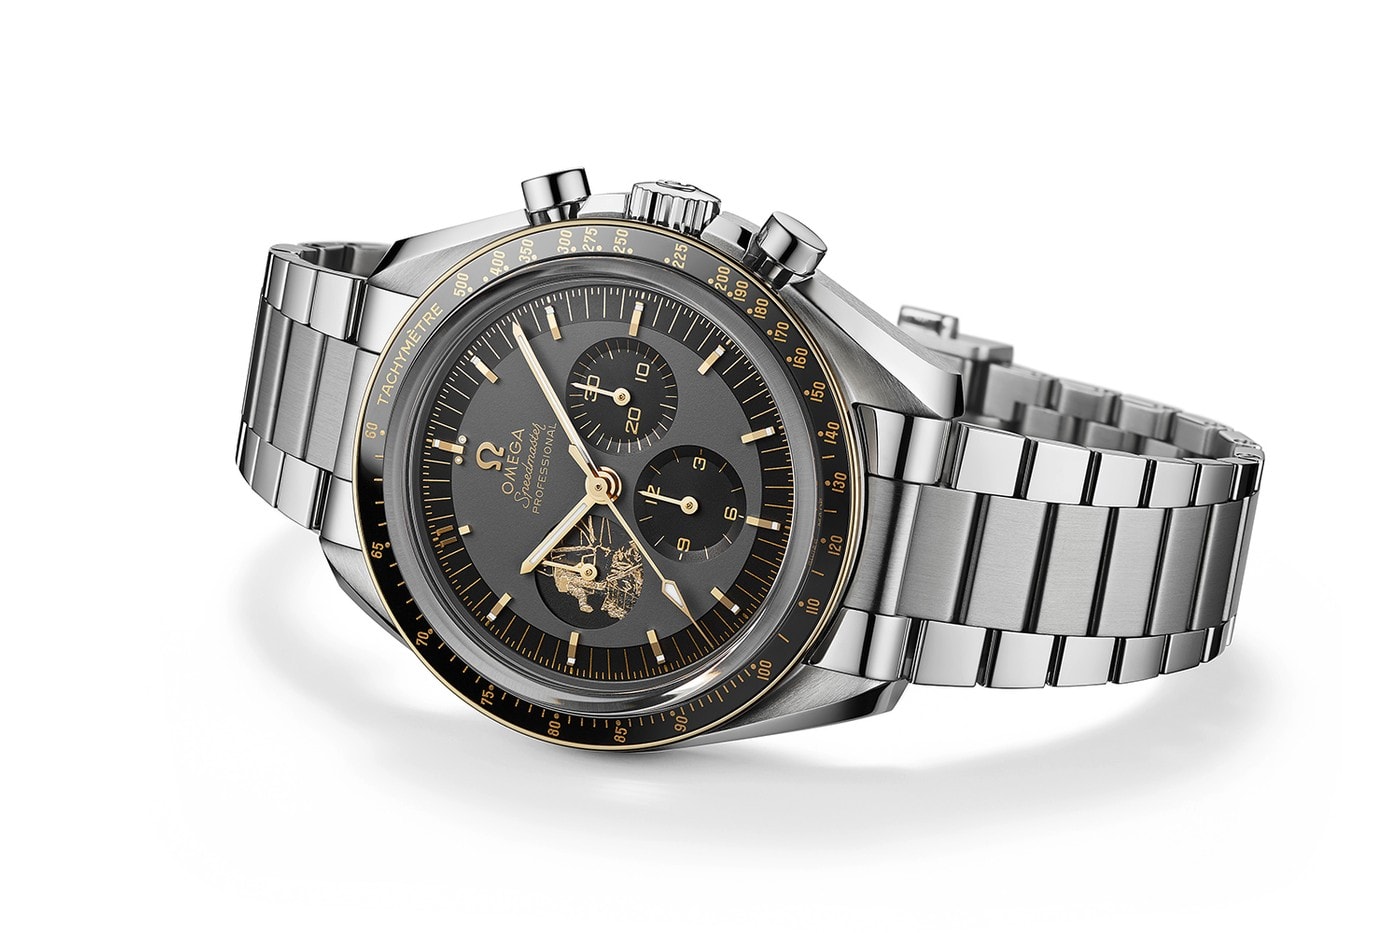 OMEGA 推出 Apollo 11 50 週年 Speedmaster 限量腕錶